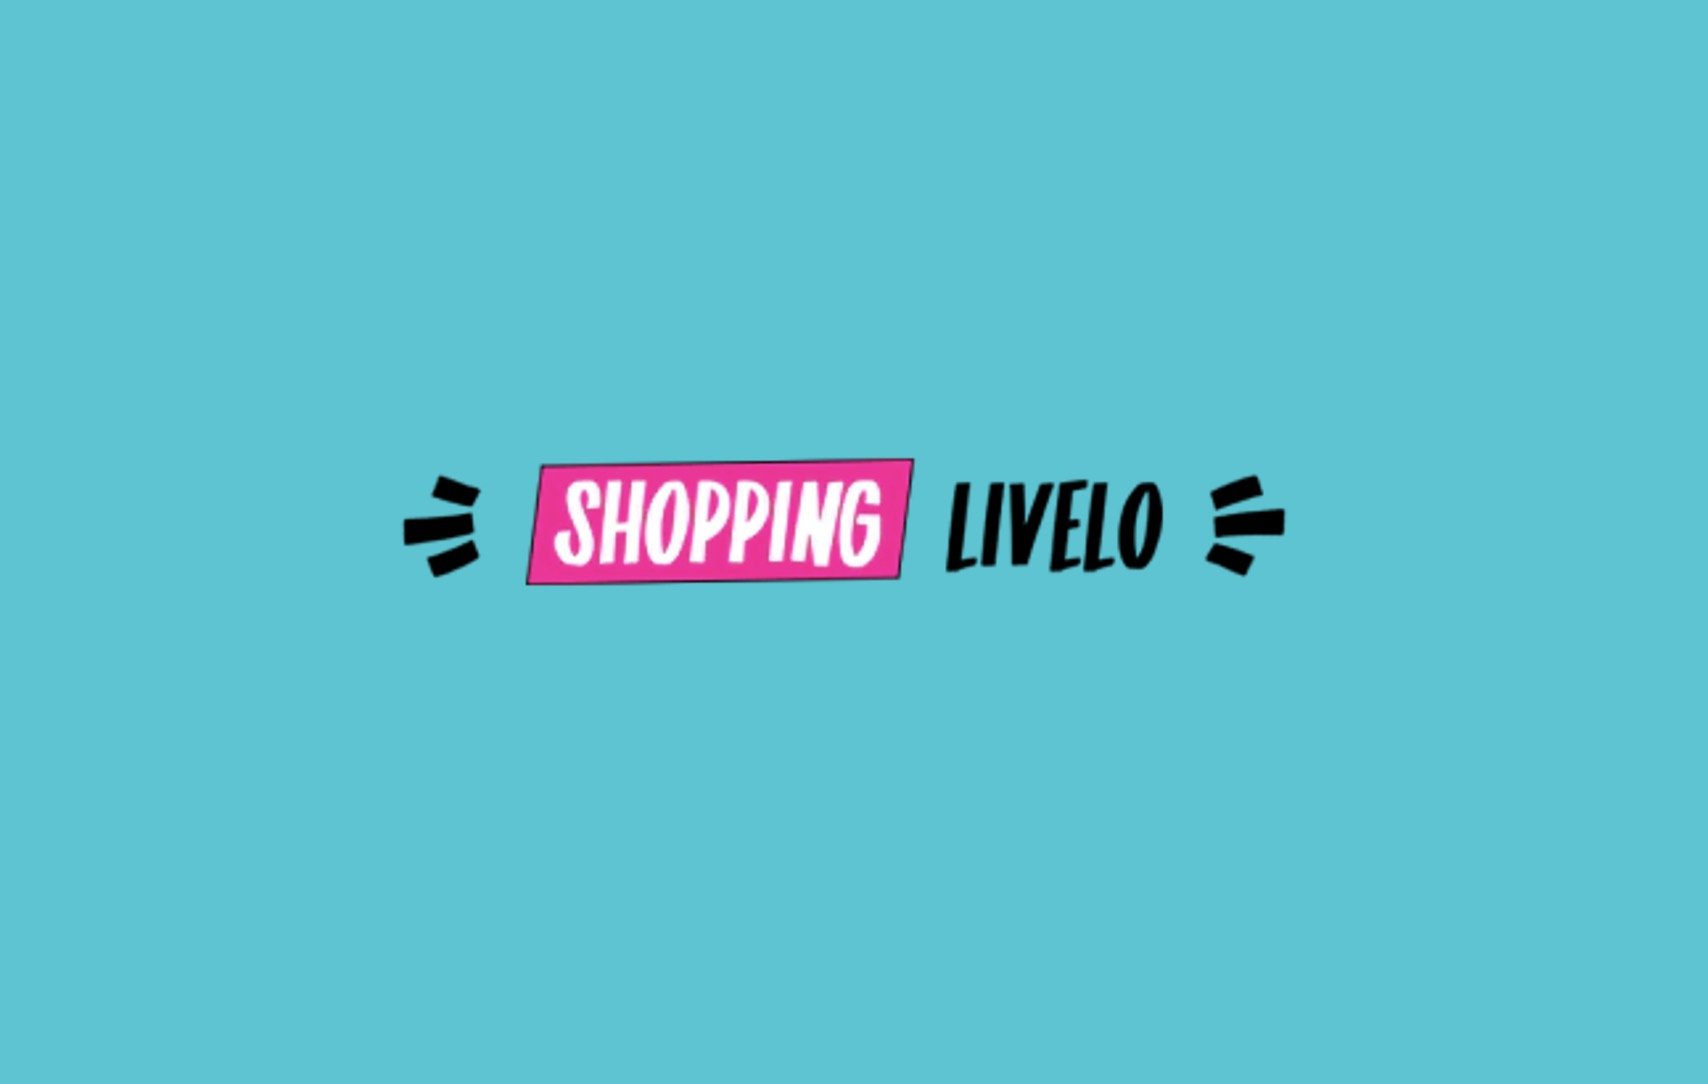 Livelo_Shopping